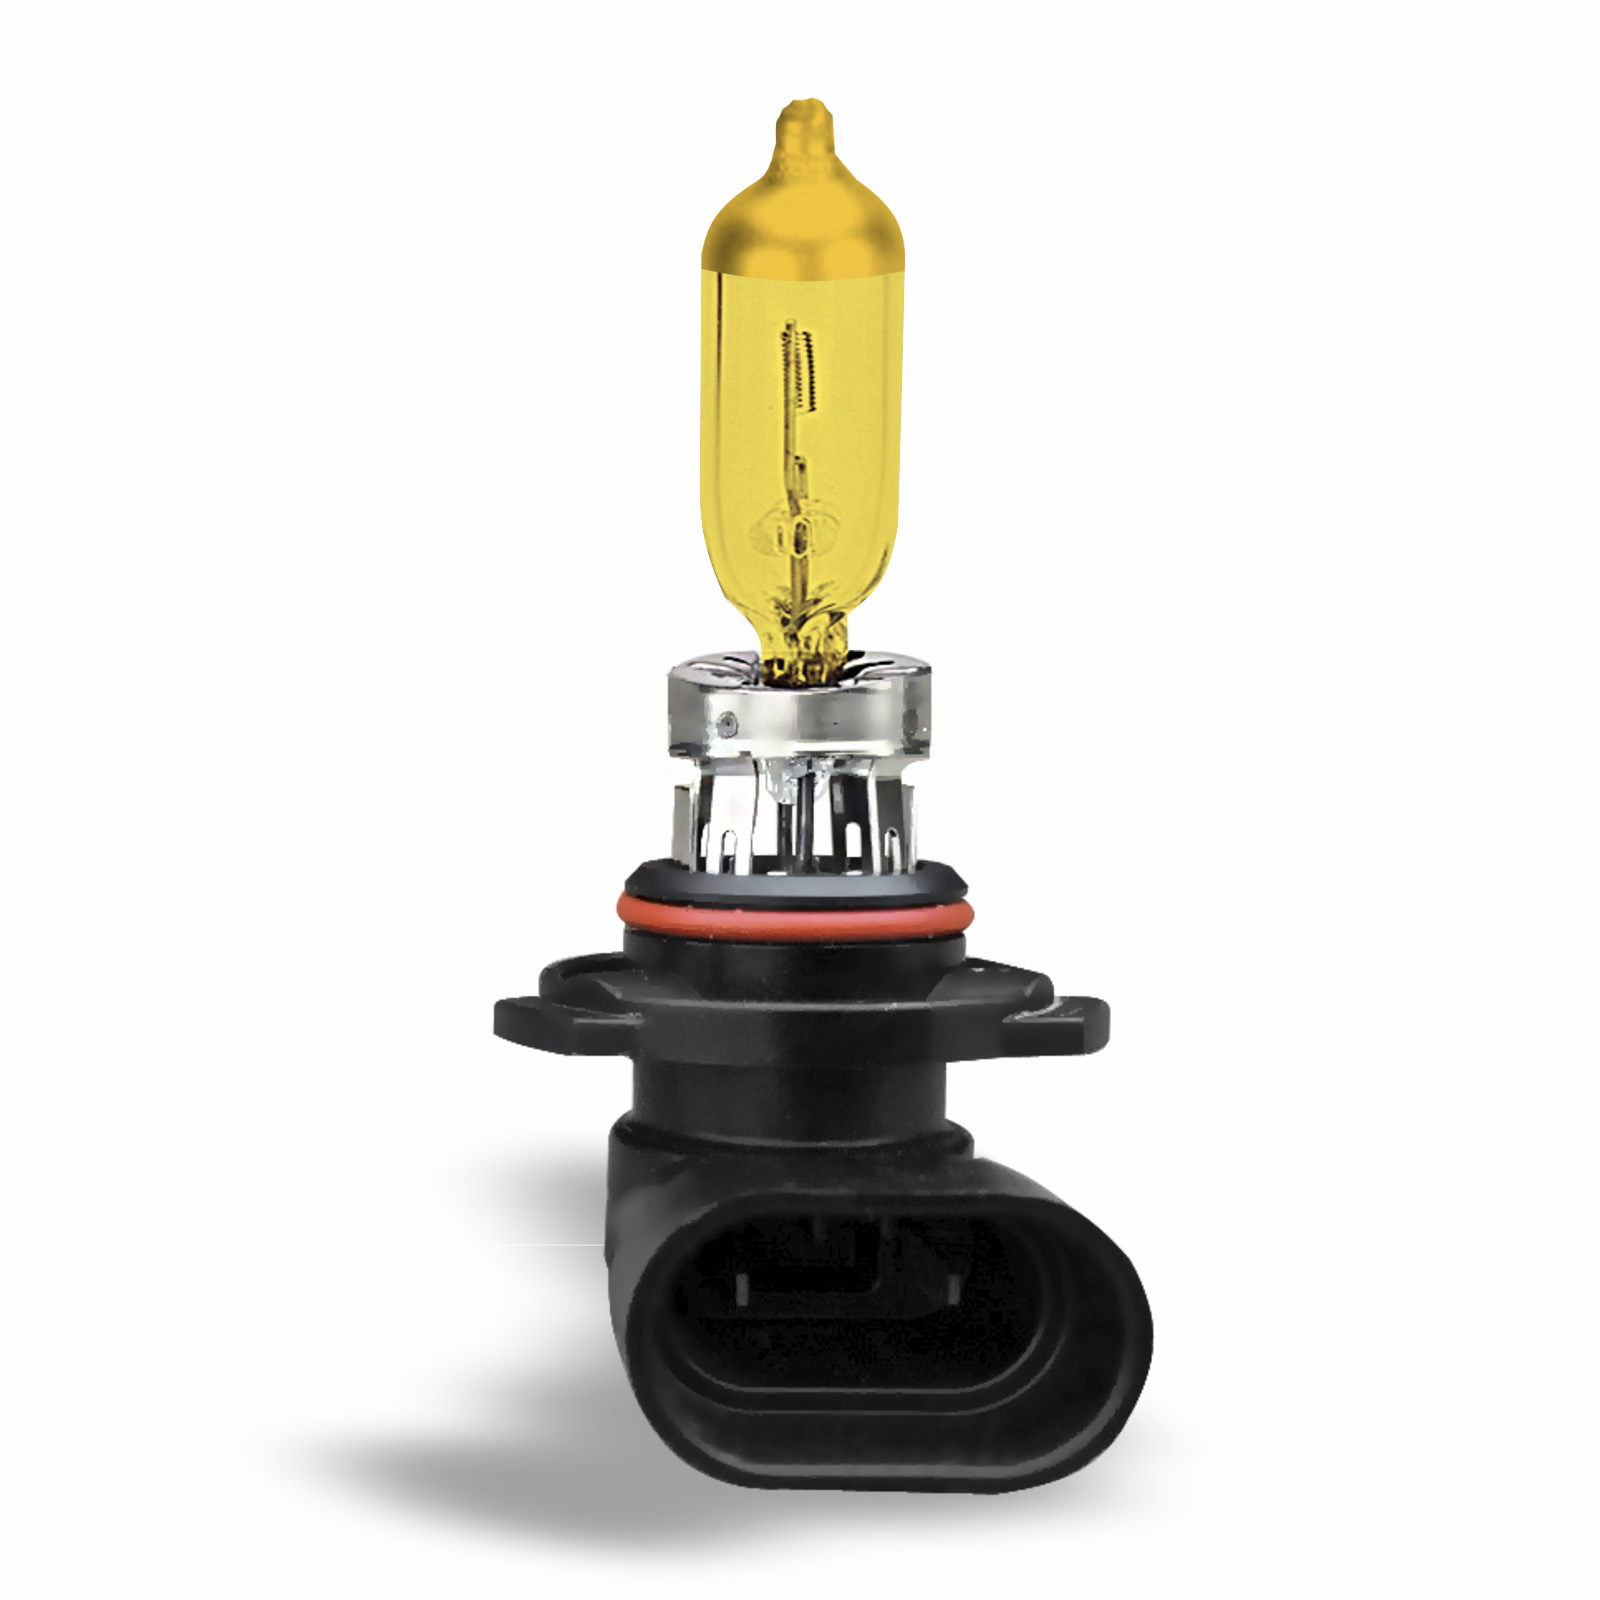 Lunex Plasma Gold H9 Car Headlight Bulb 2800K Twin 